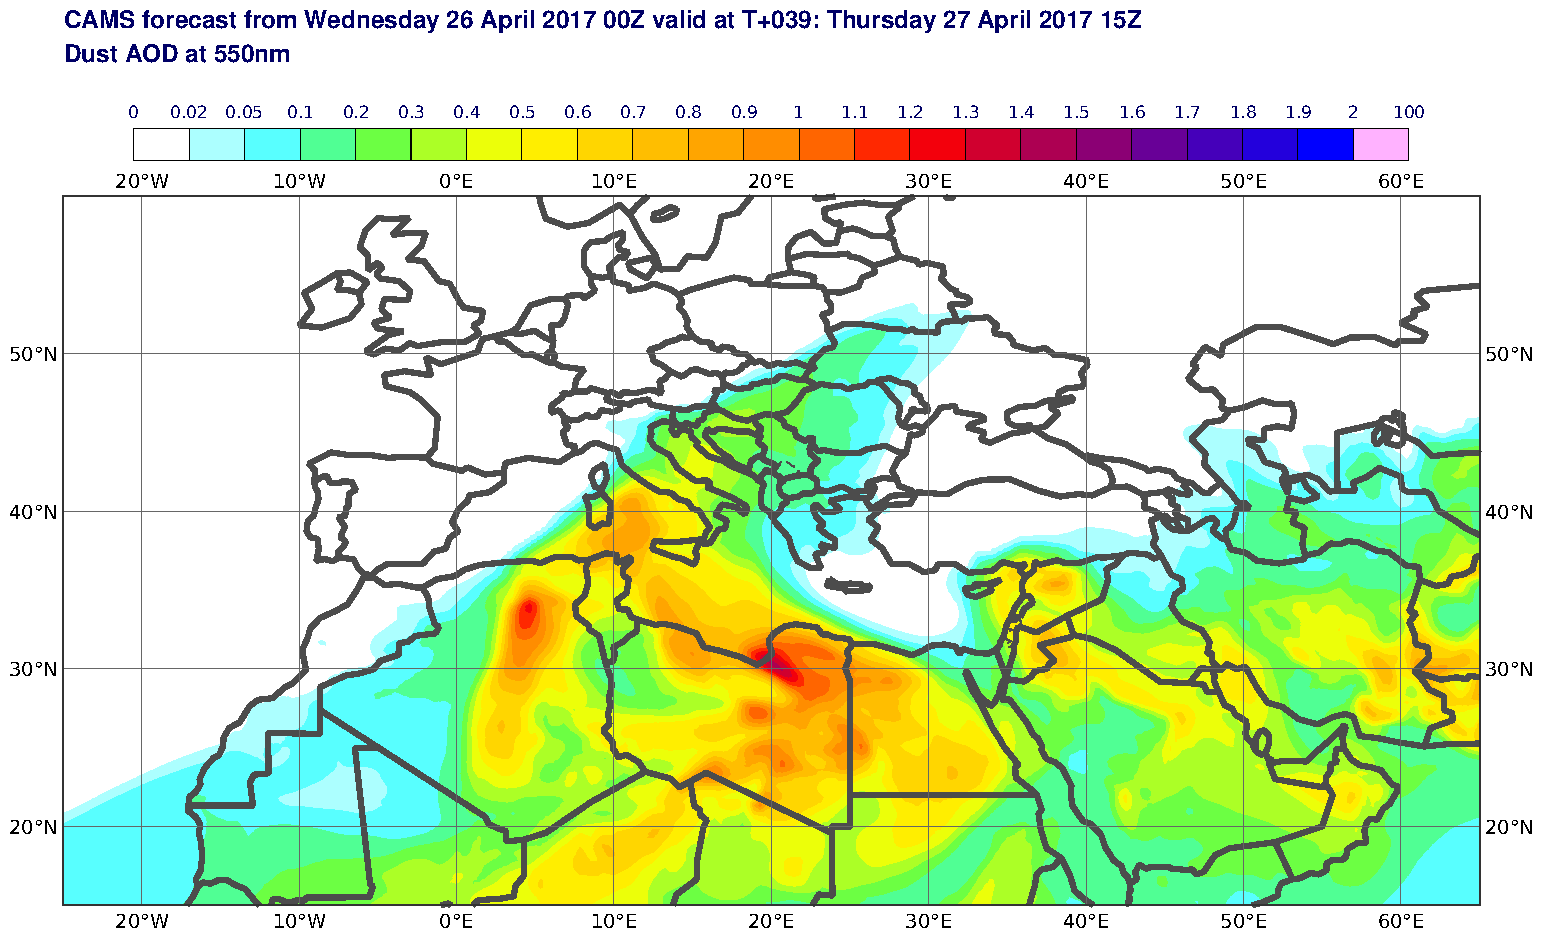 Dust AOD at 550nm valid at T39 - 2017-04-27 15:00